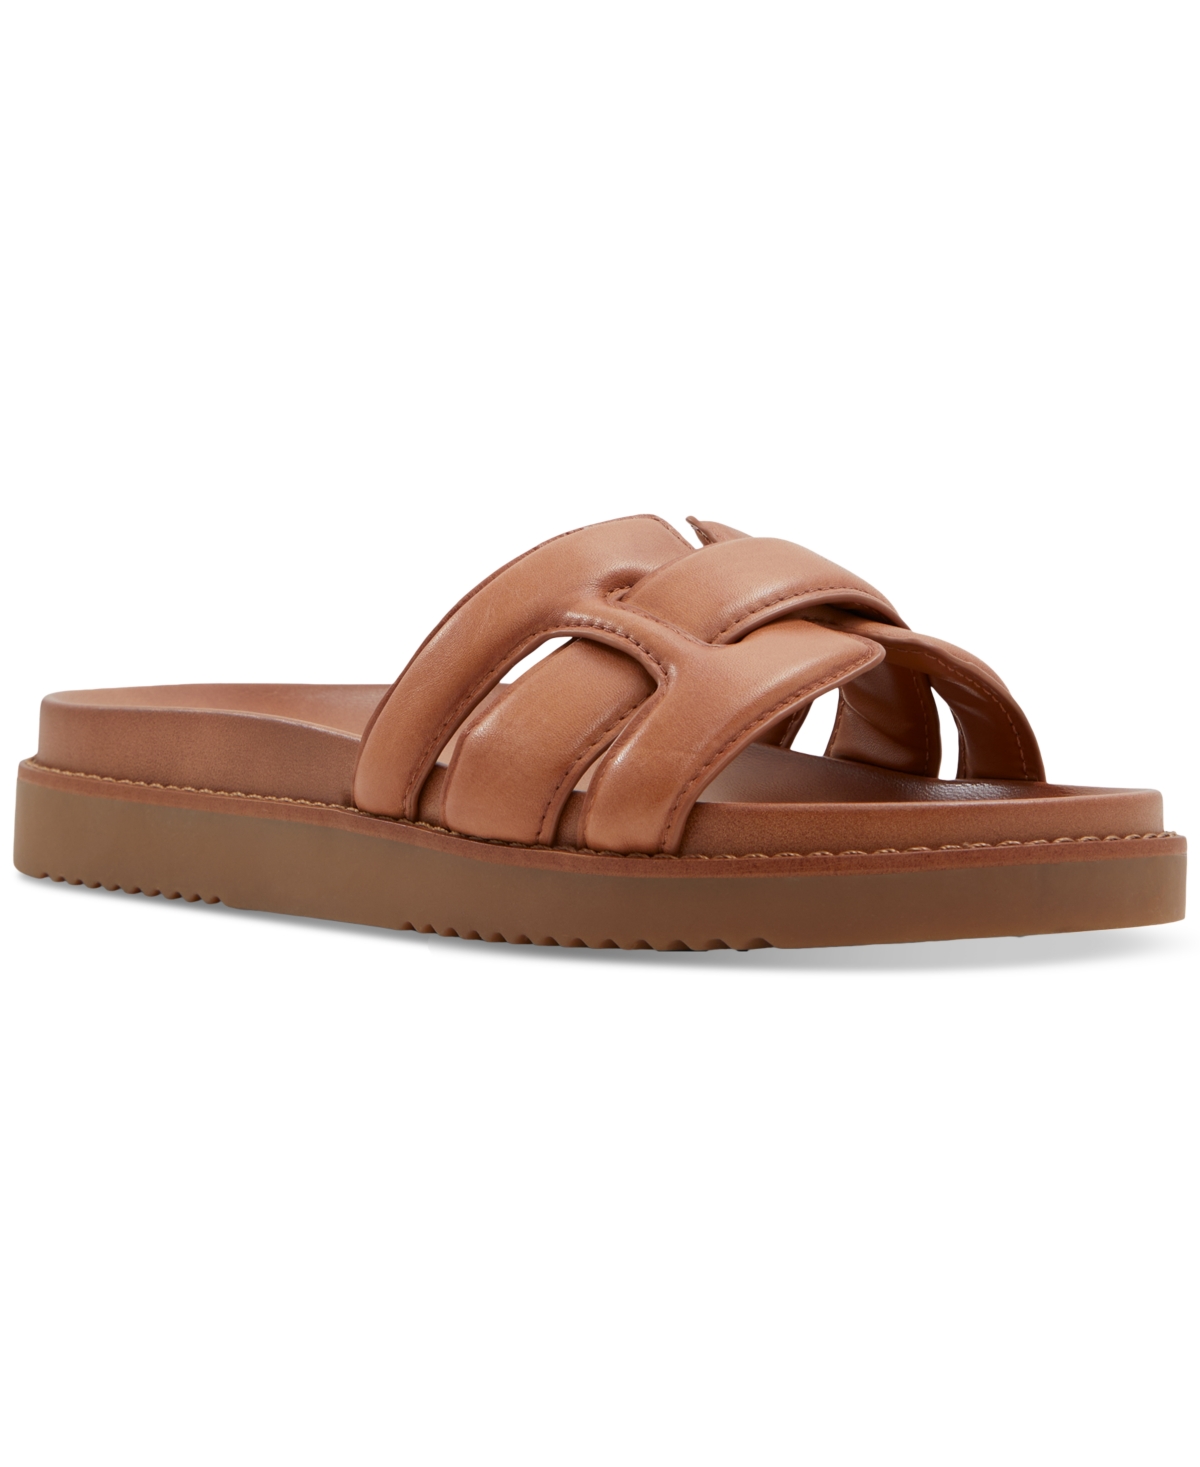 Women's Wylalaendar Flatform Slide Sandals - Medium Brown Multi